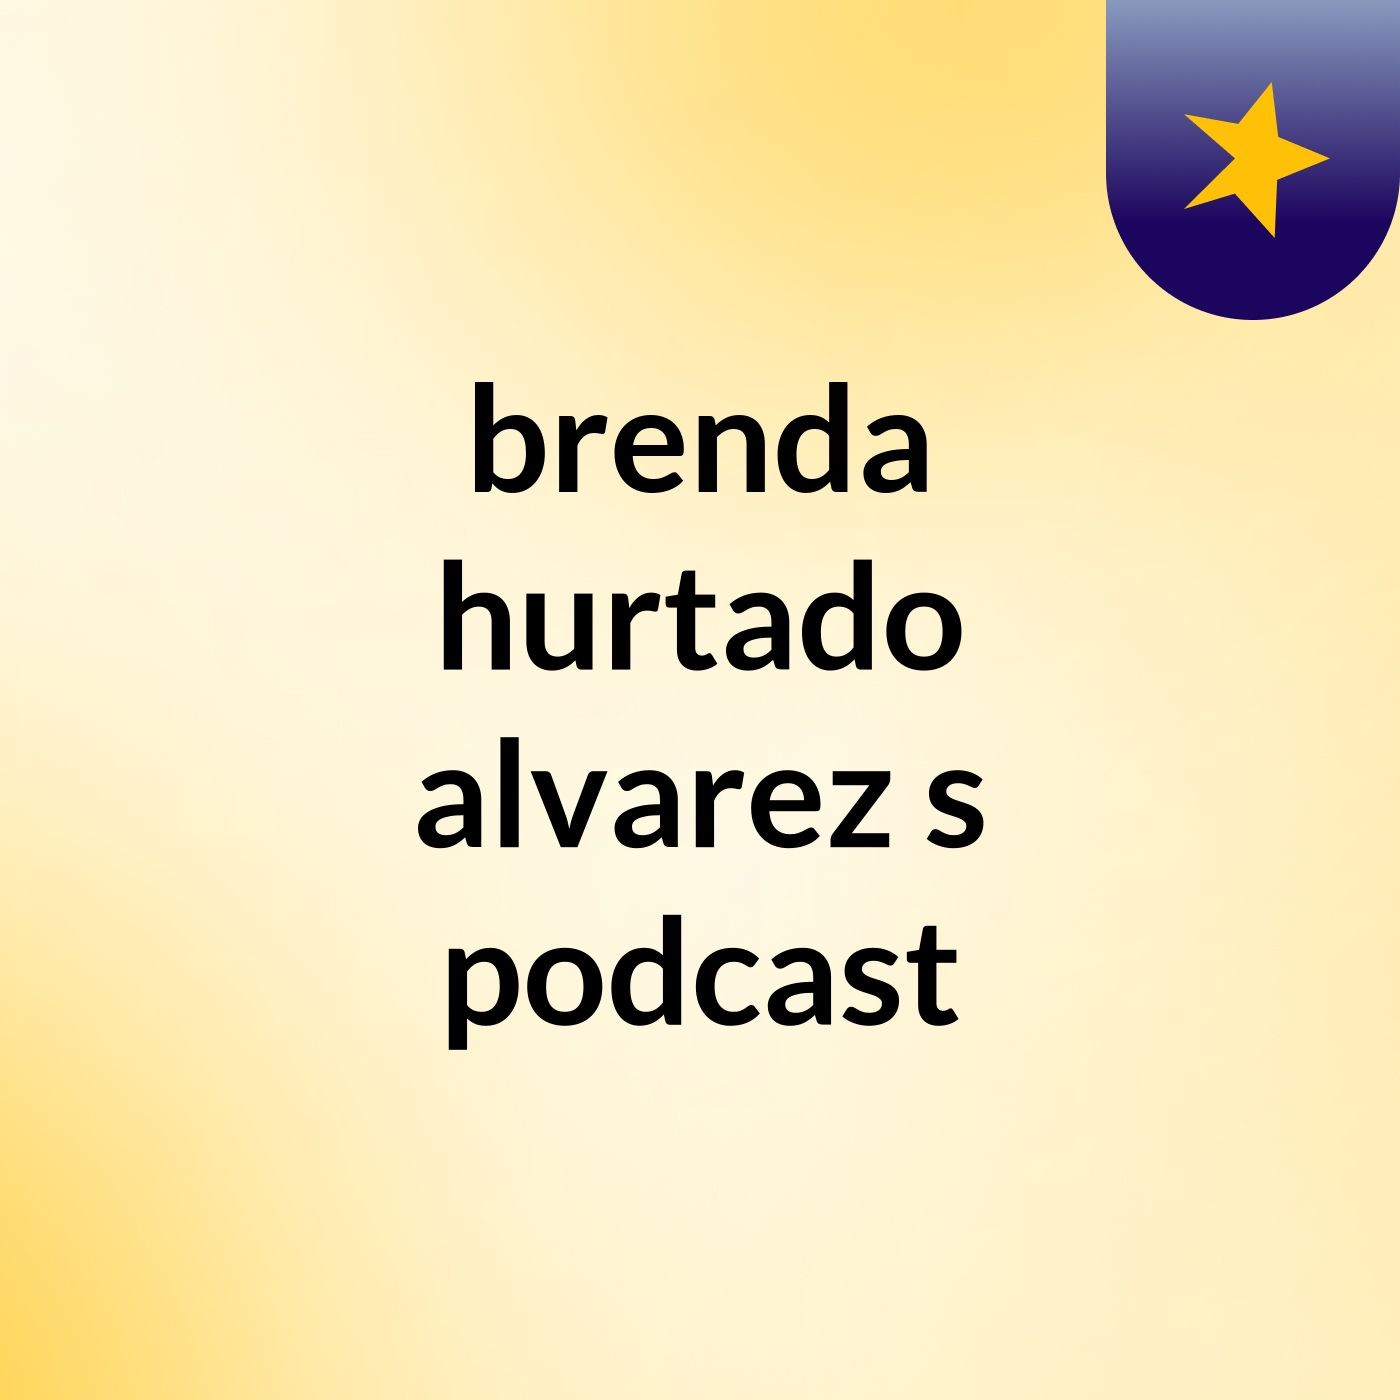 brenda hurtado alvarez's podcast